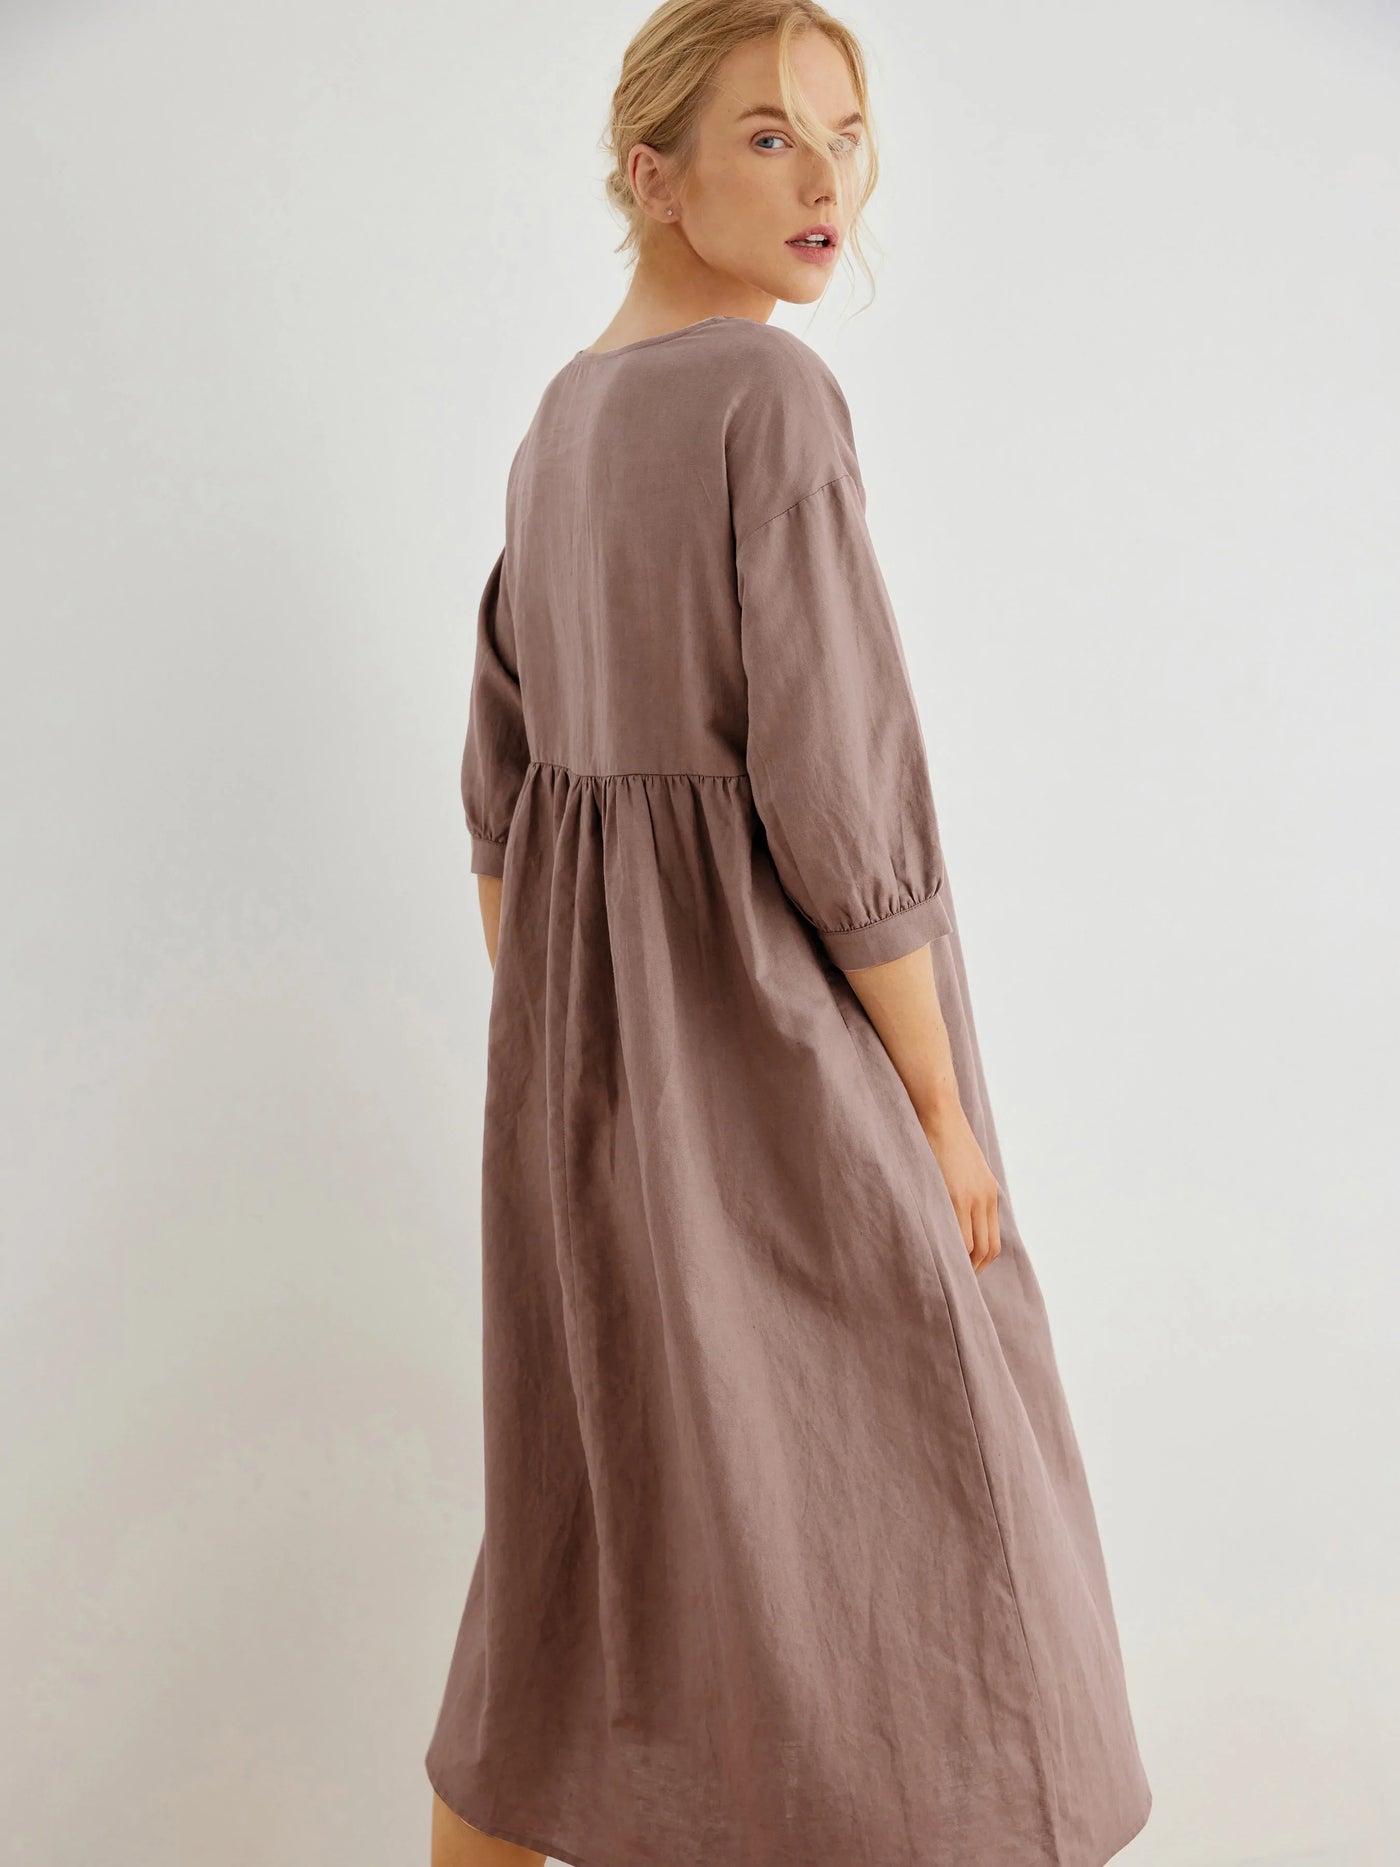 Maeve Linen Portrait Neckline 3/4 Sleeve Maxi Dress